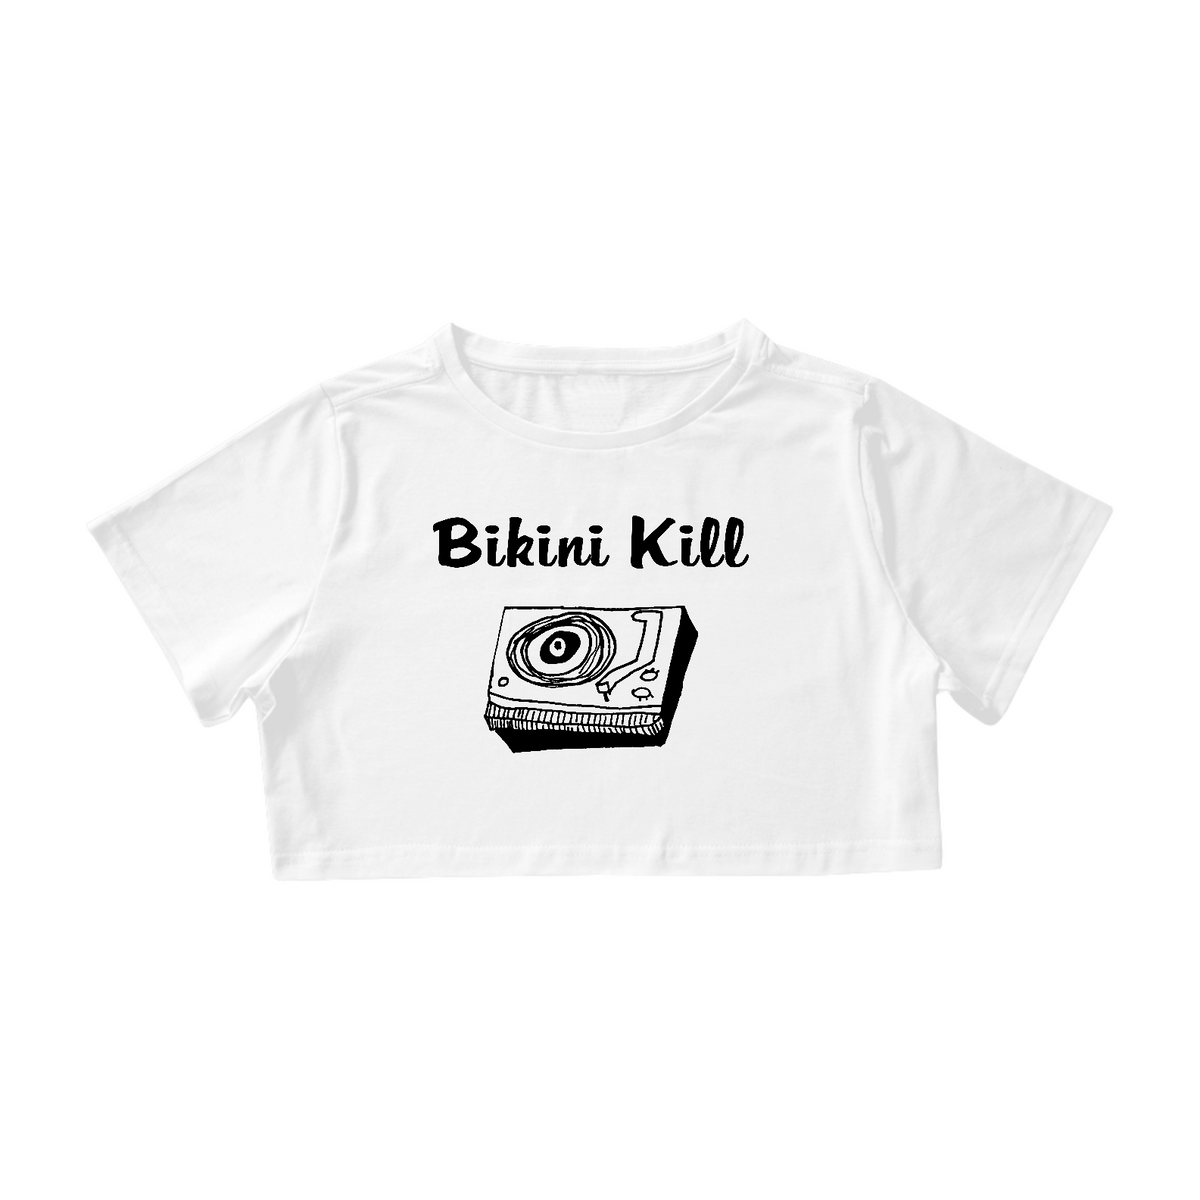 Nome do produto: BIKINI KILL